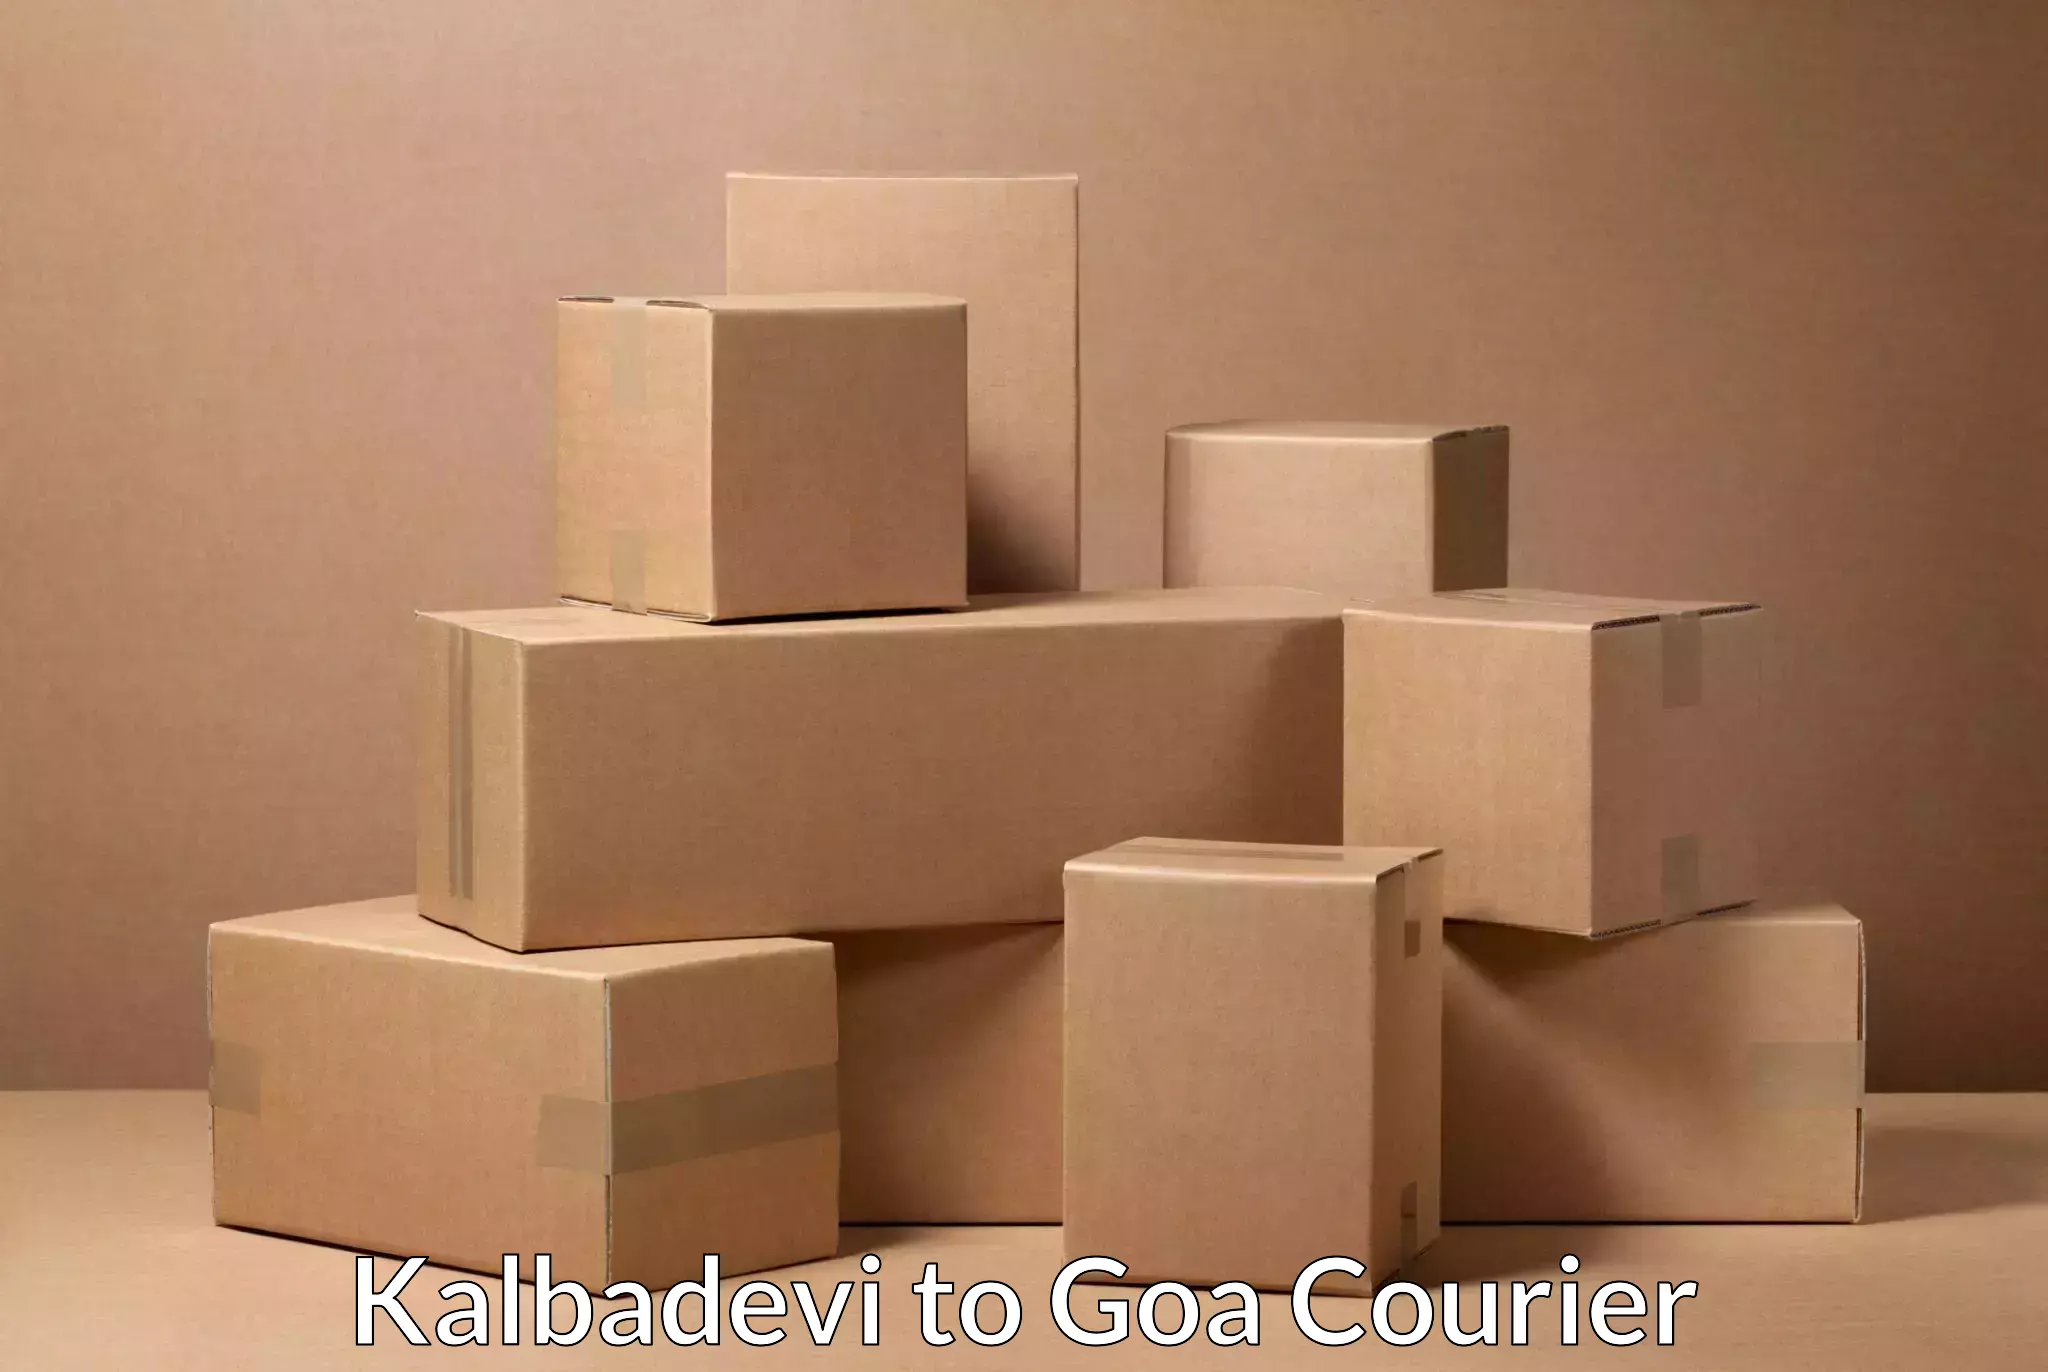 Courier service efficiency Kalbadevi to Goa